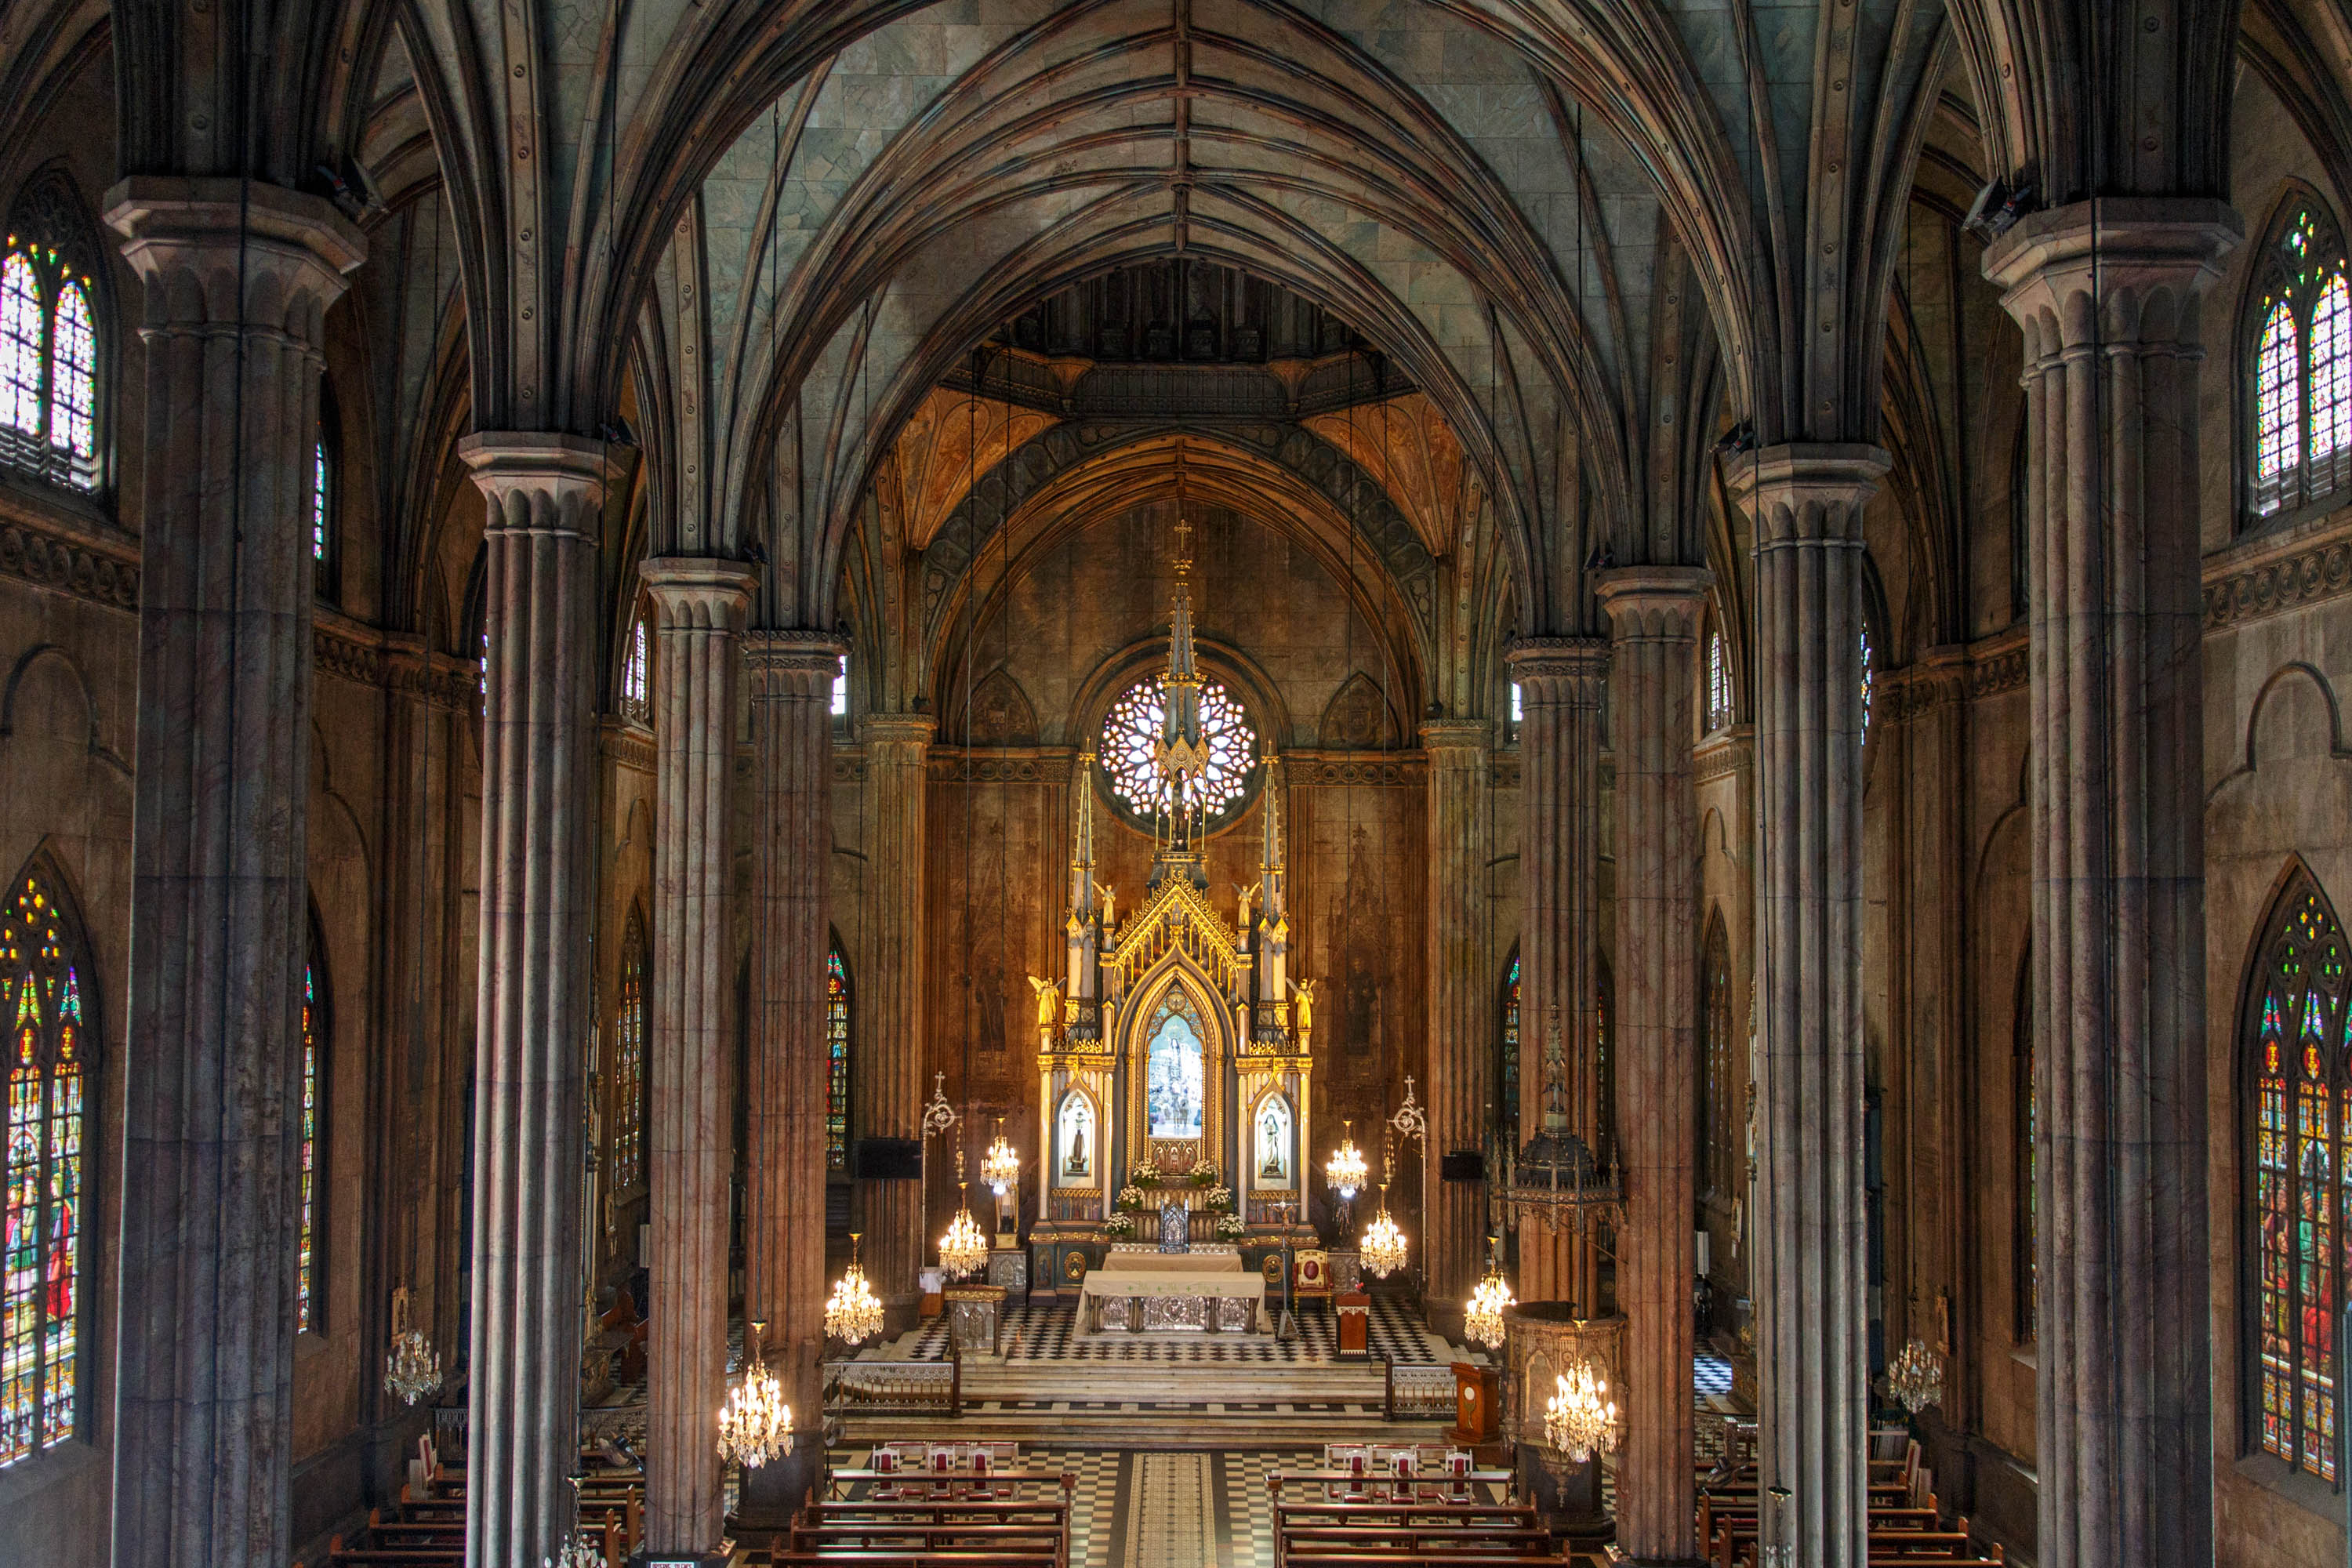 San Sebastian Basilica